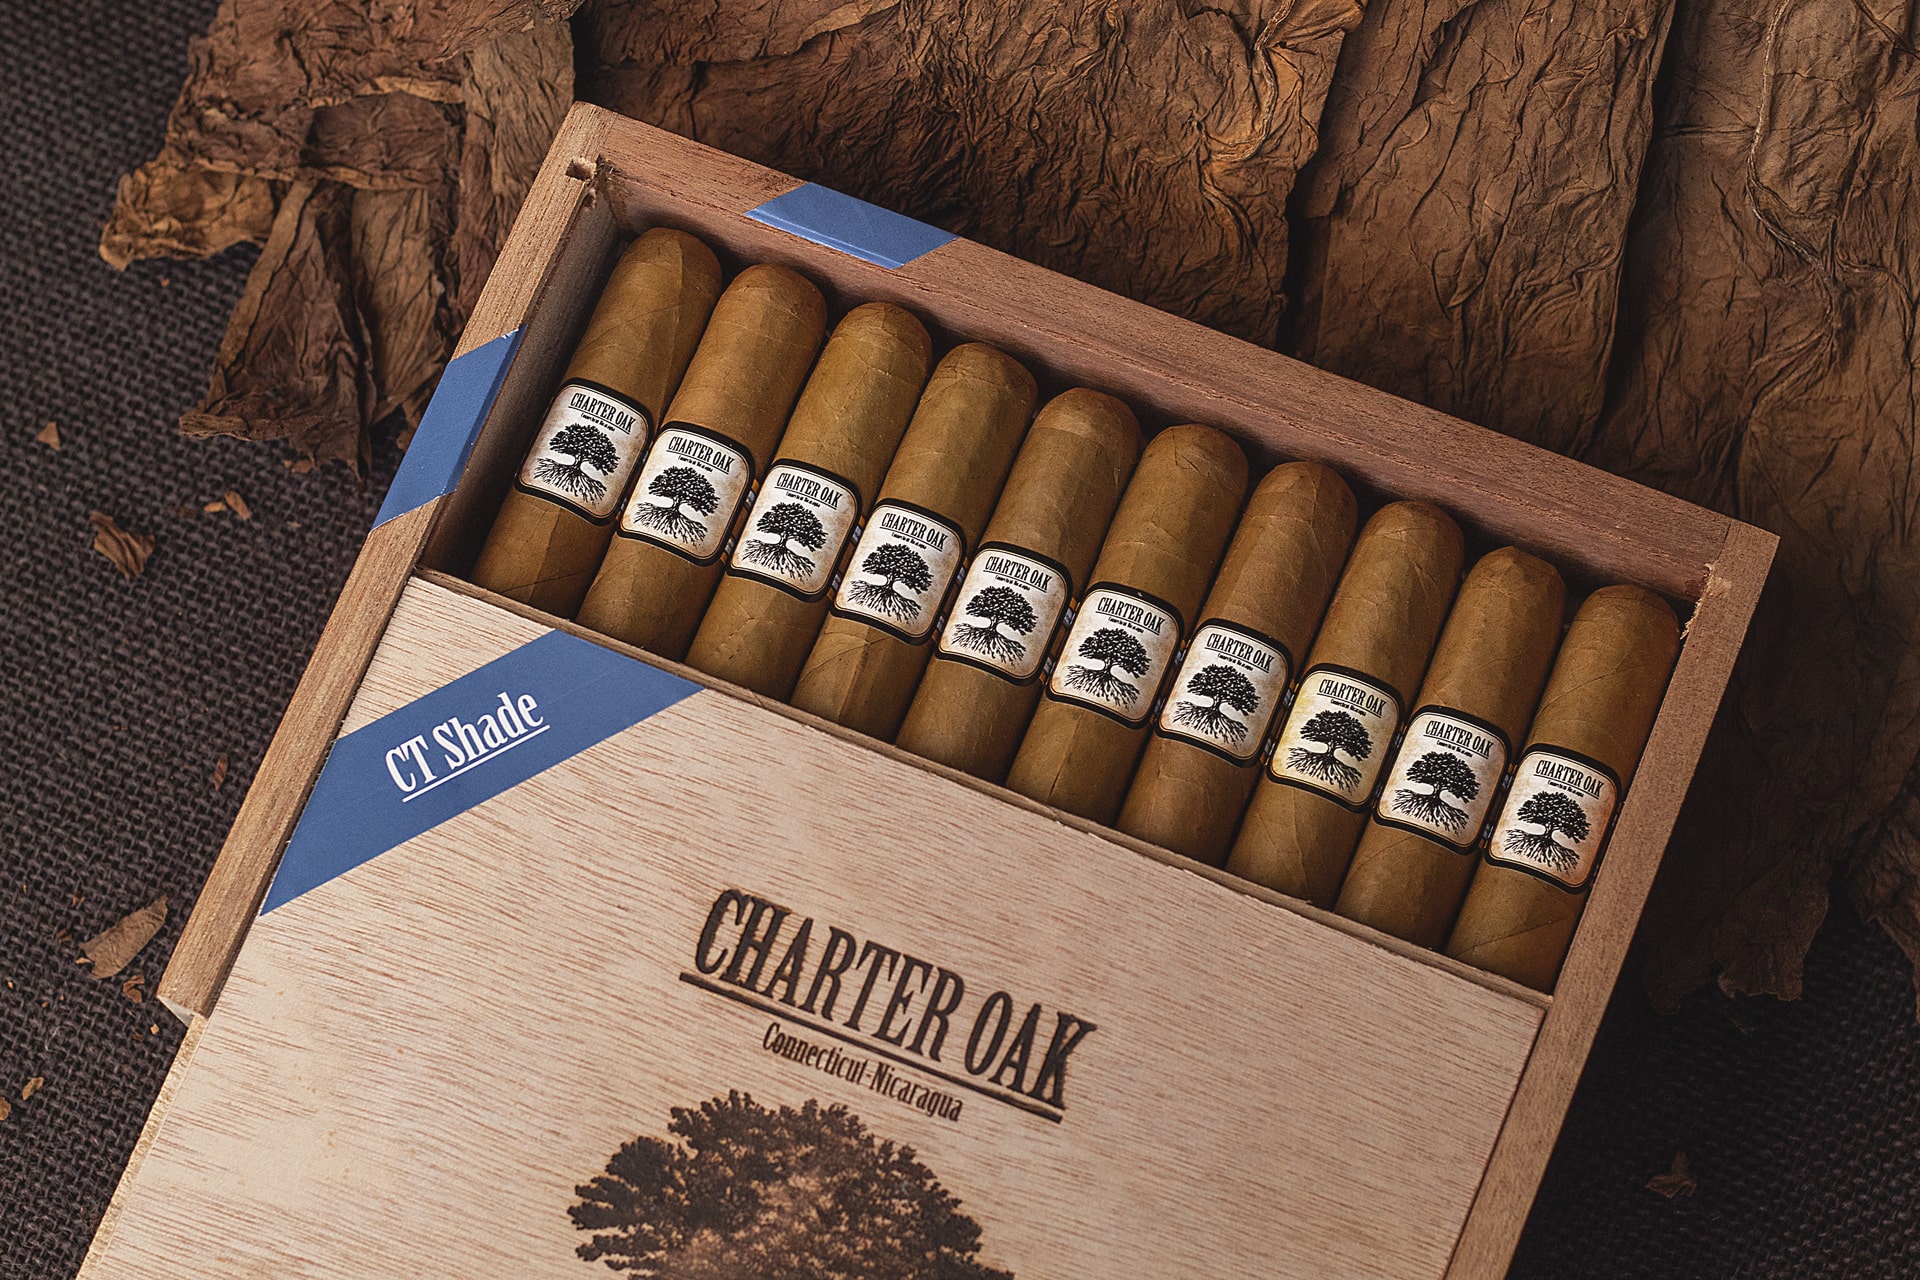 Foundation Charter Oak Contemporary Empty Cigar Box – Empty Cigar